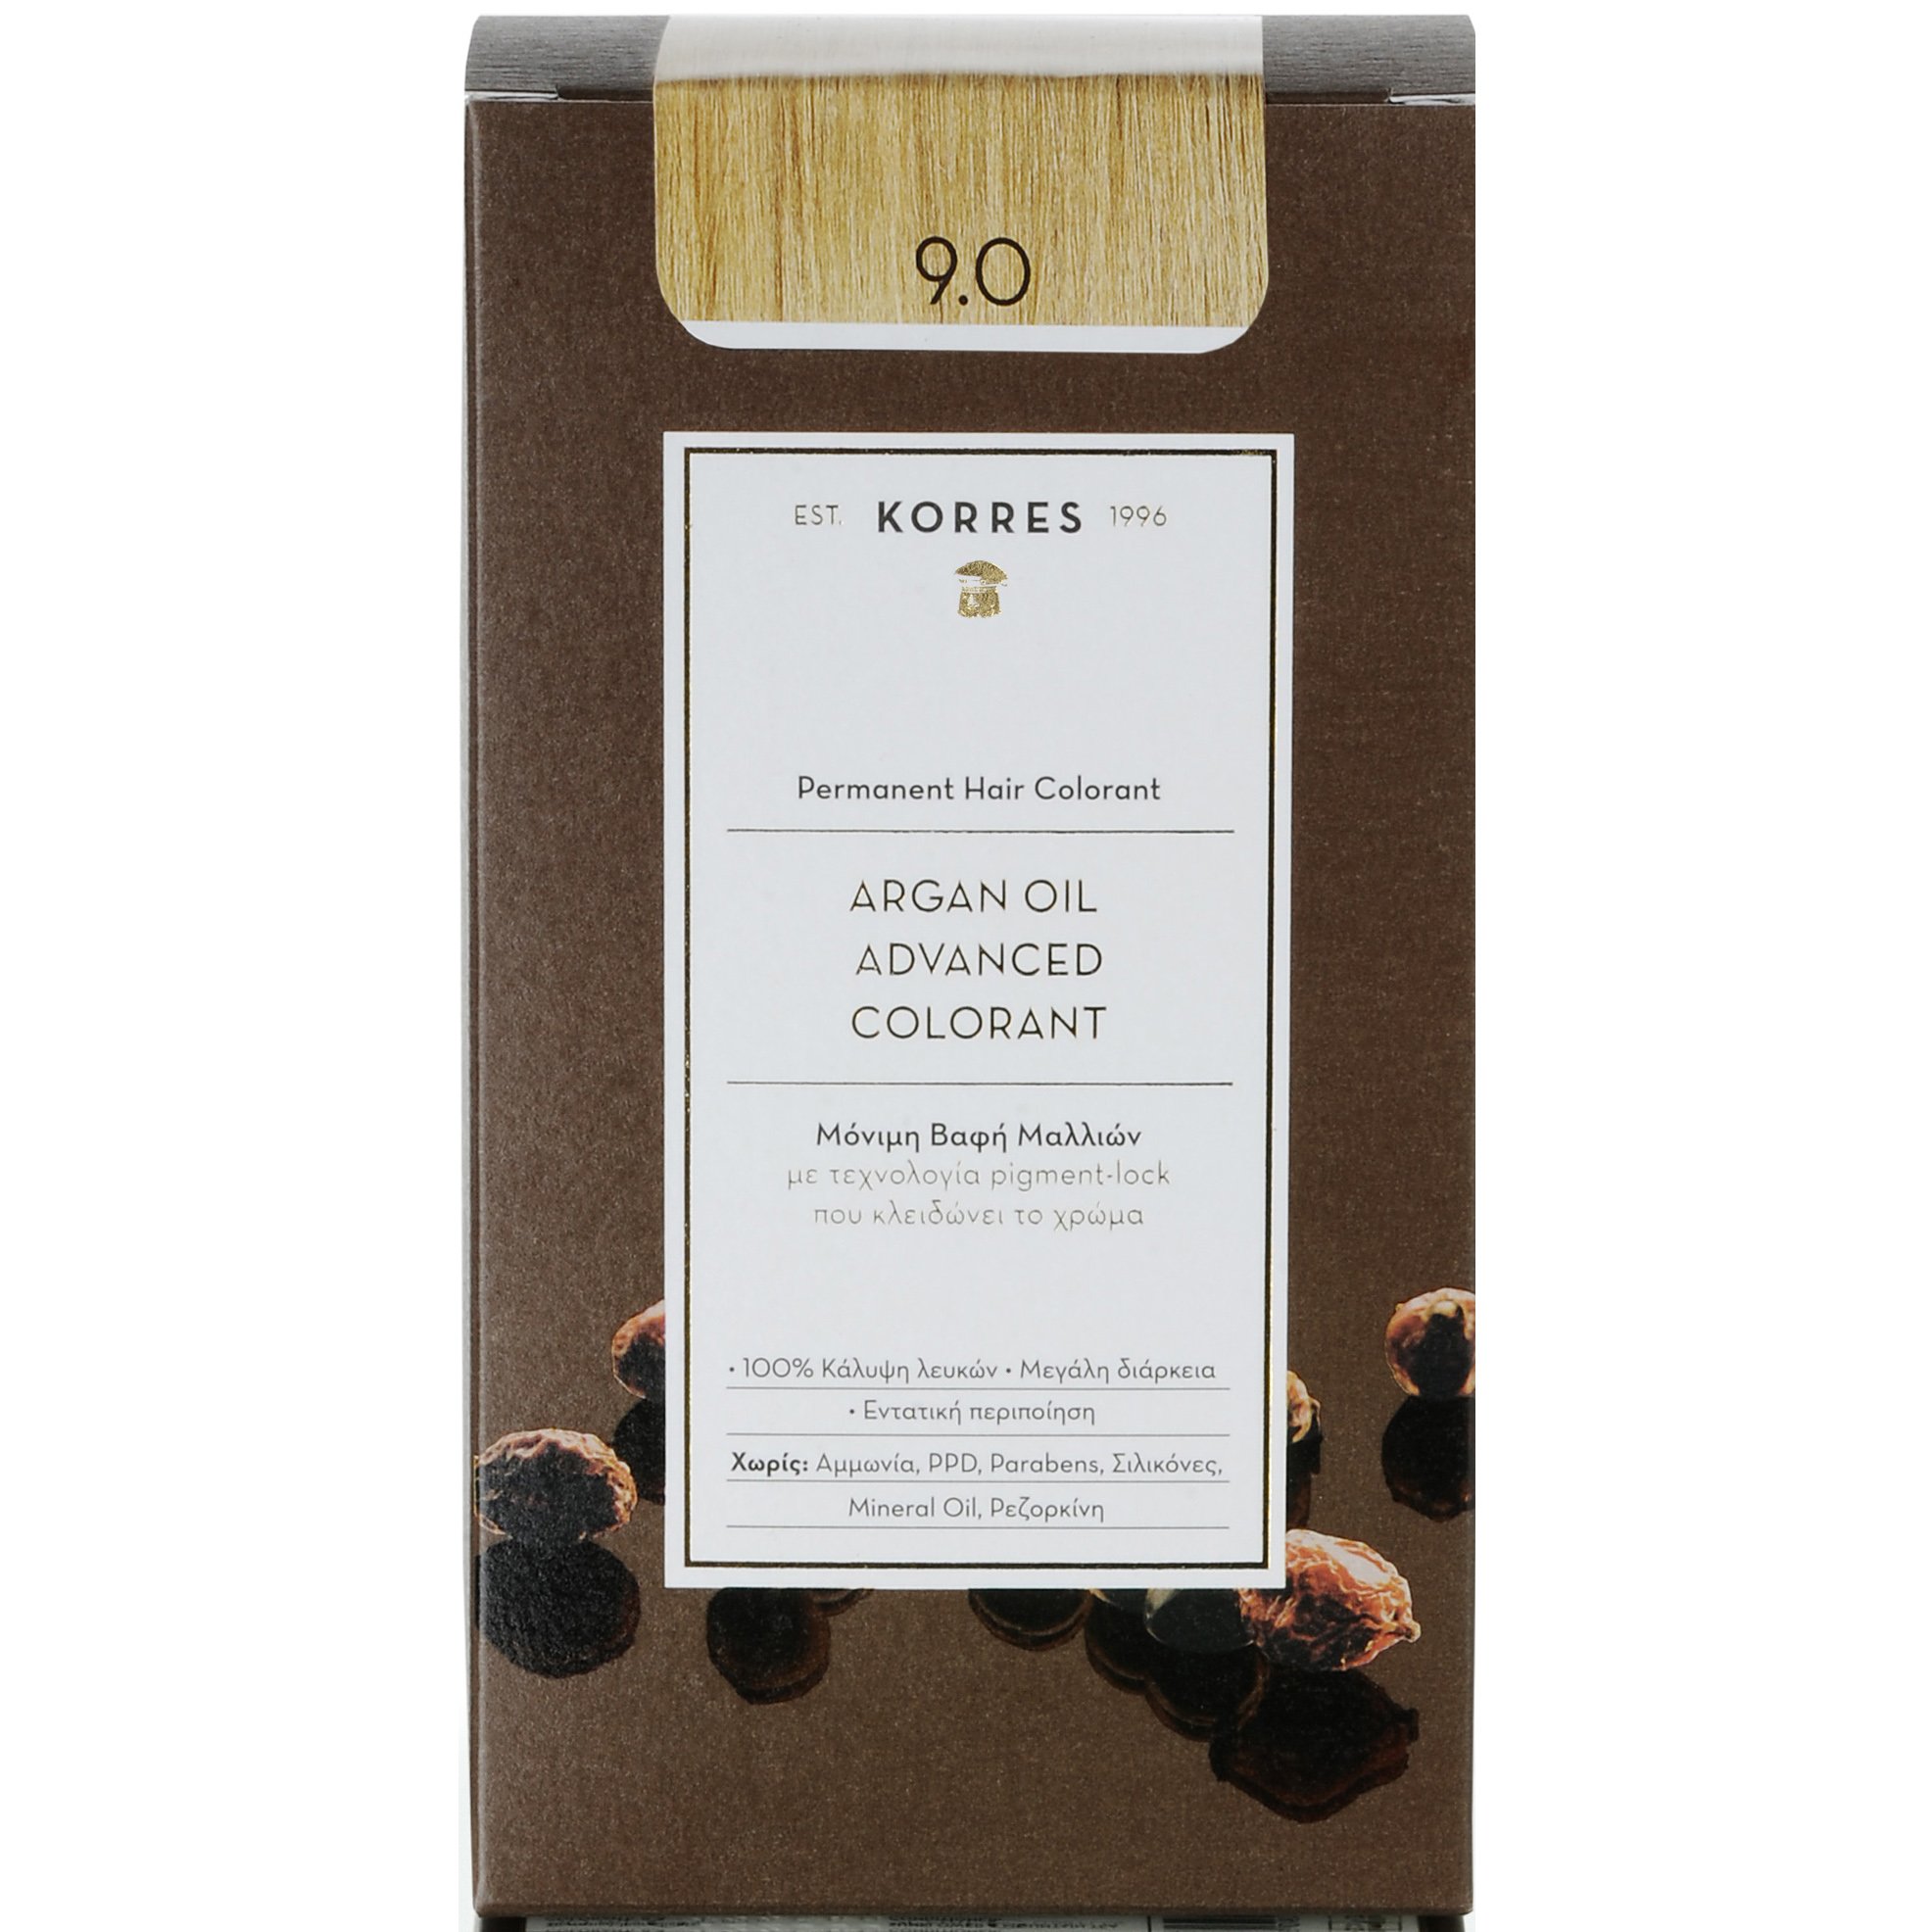 Korres Argan Oil Advanced Colorant Μόνιμη Βαφή Μαλλιών με Τεχνολογία Pigment-Lock που Κλειδώνει το Χρώμα 50ml – 9.0 ΚΑΤΑΞΑΝΘΟ ΦΥΣΙΚΟ